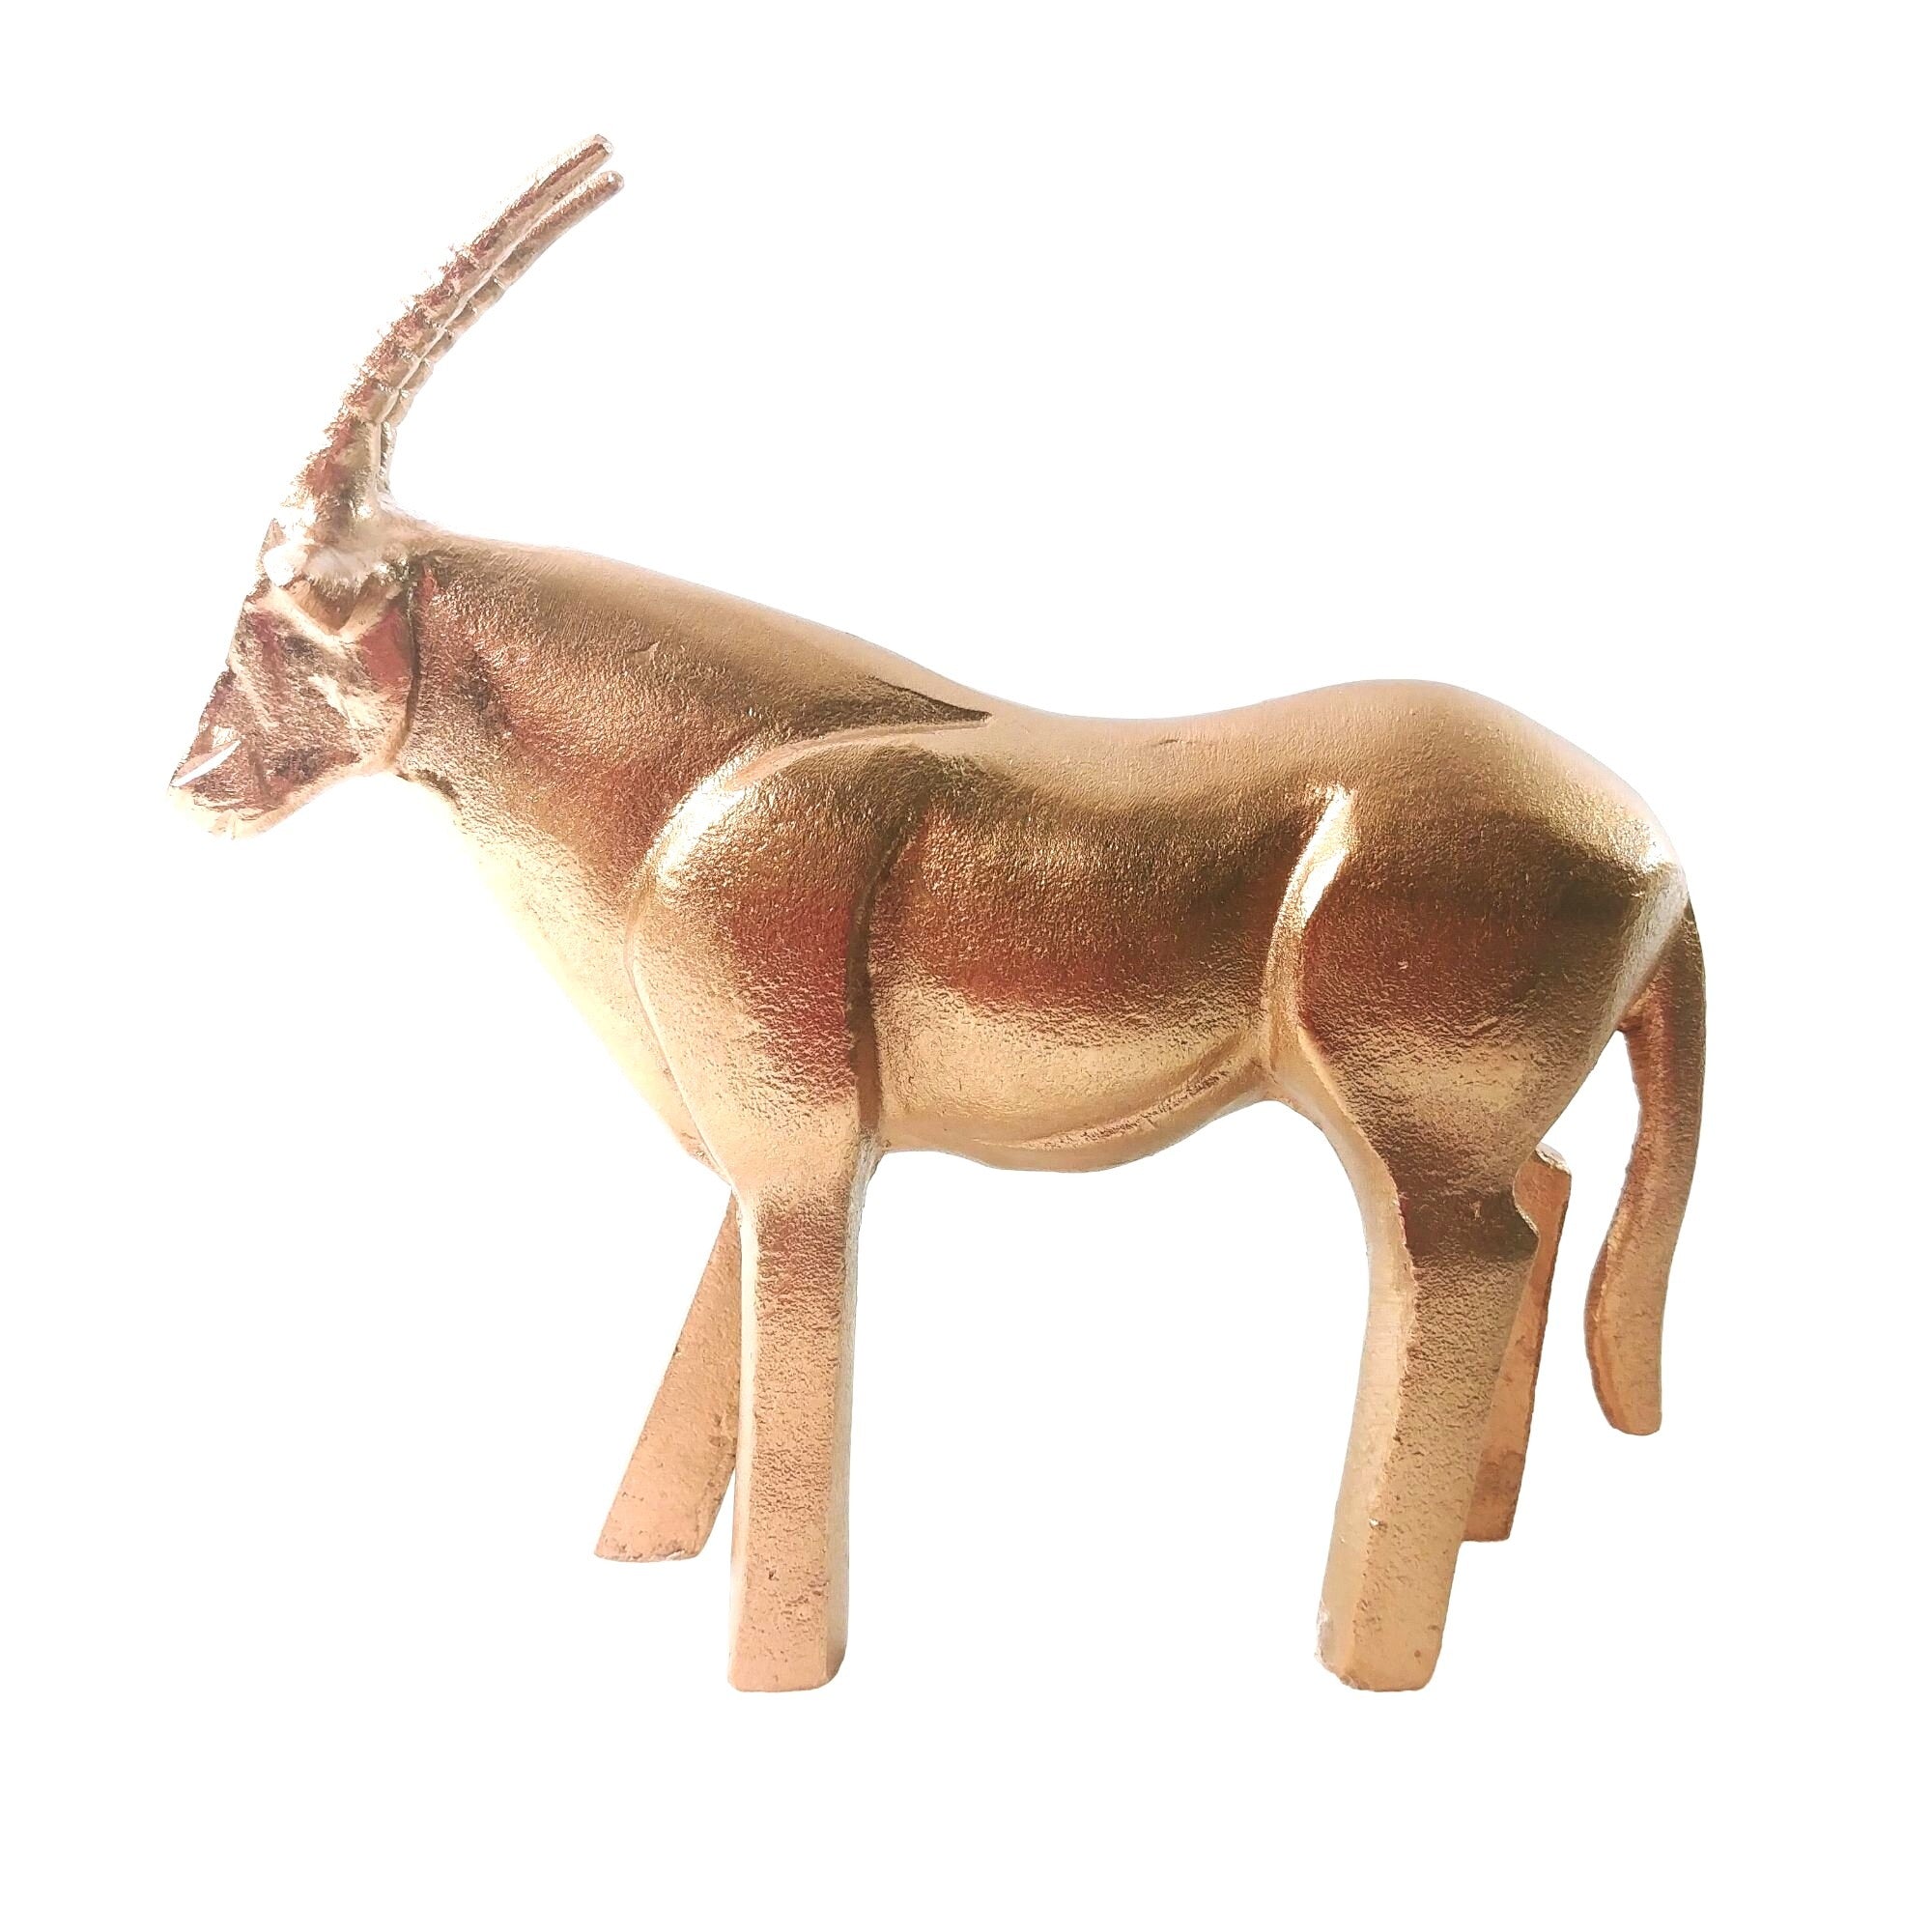 Antelope Gazelle Animal Statue Figurine Copper Colored Cast Aluminum 8" Tall